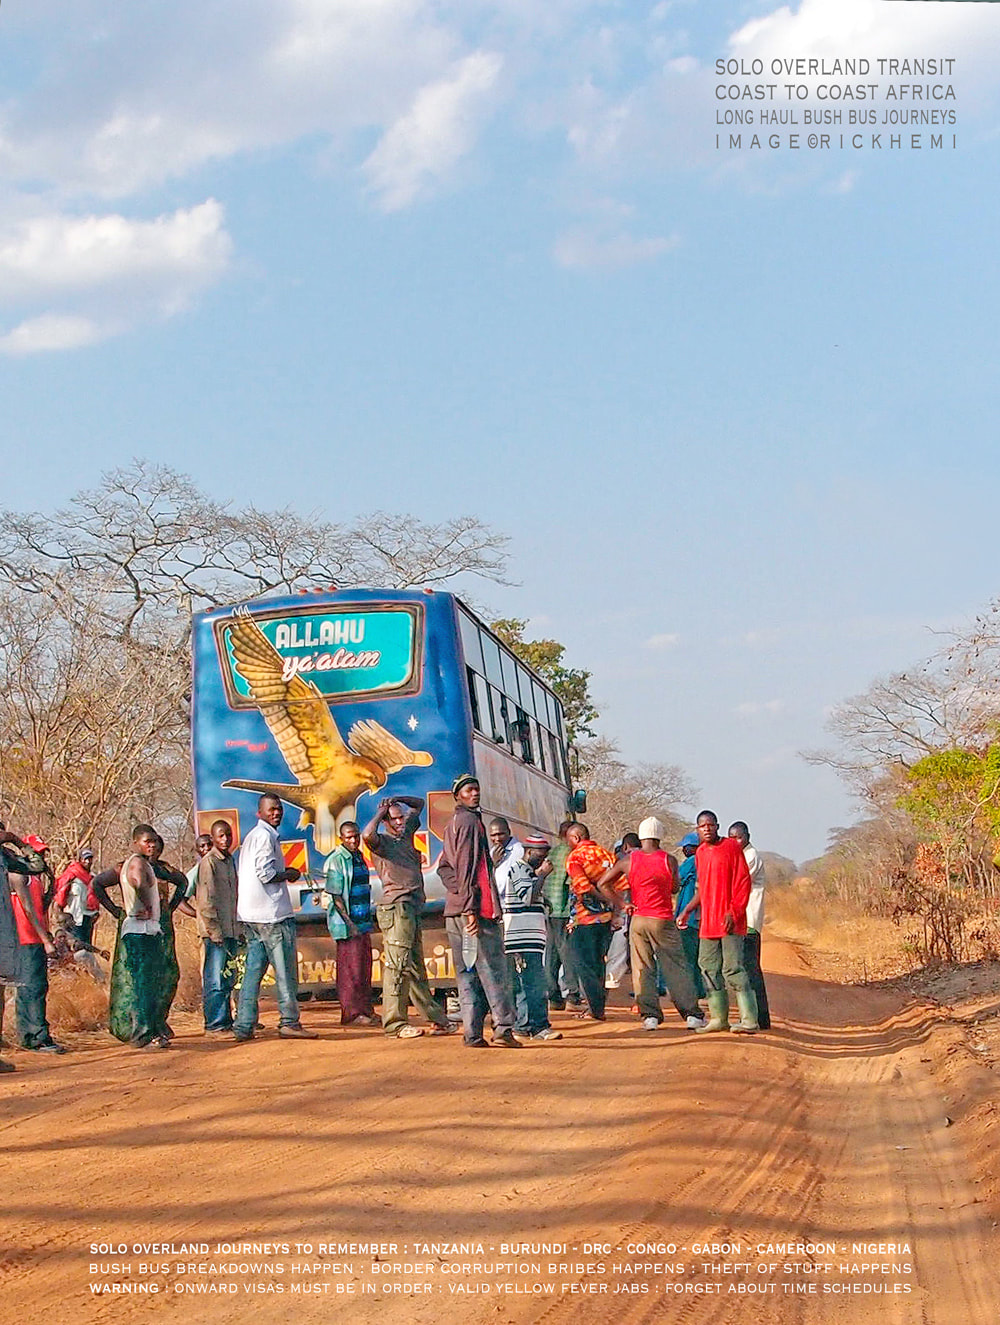 solo overland travel and transit Africa, bush bus coast to coast Africa, image by Rick Hemi